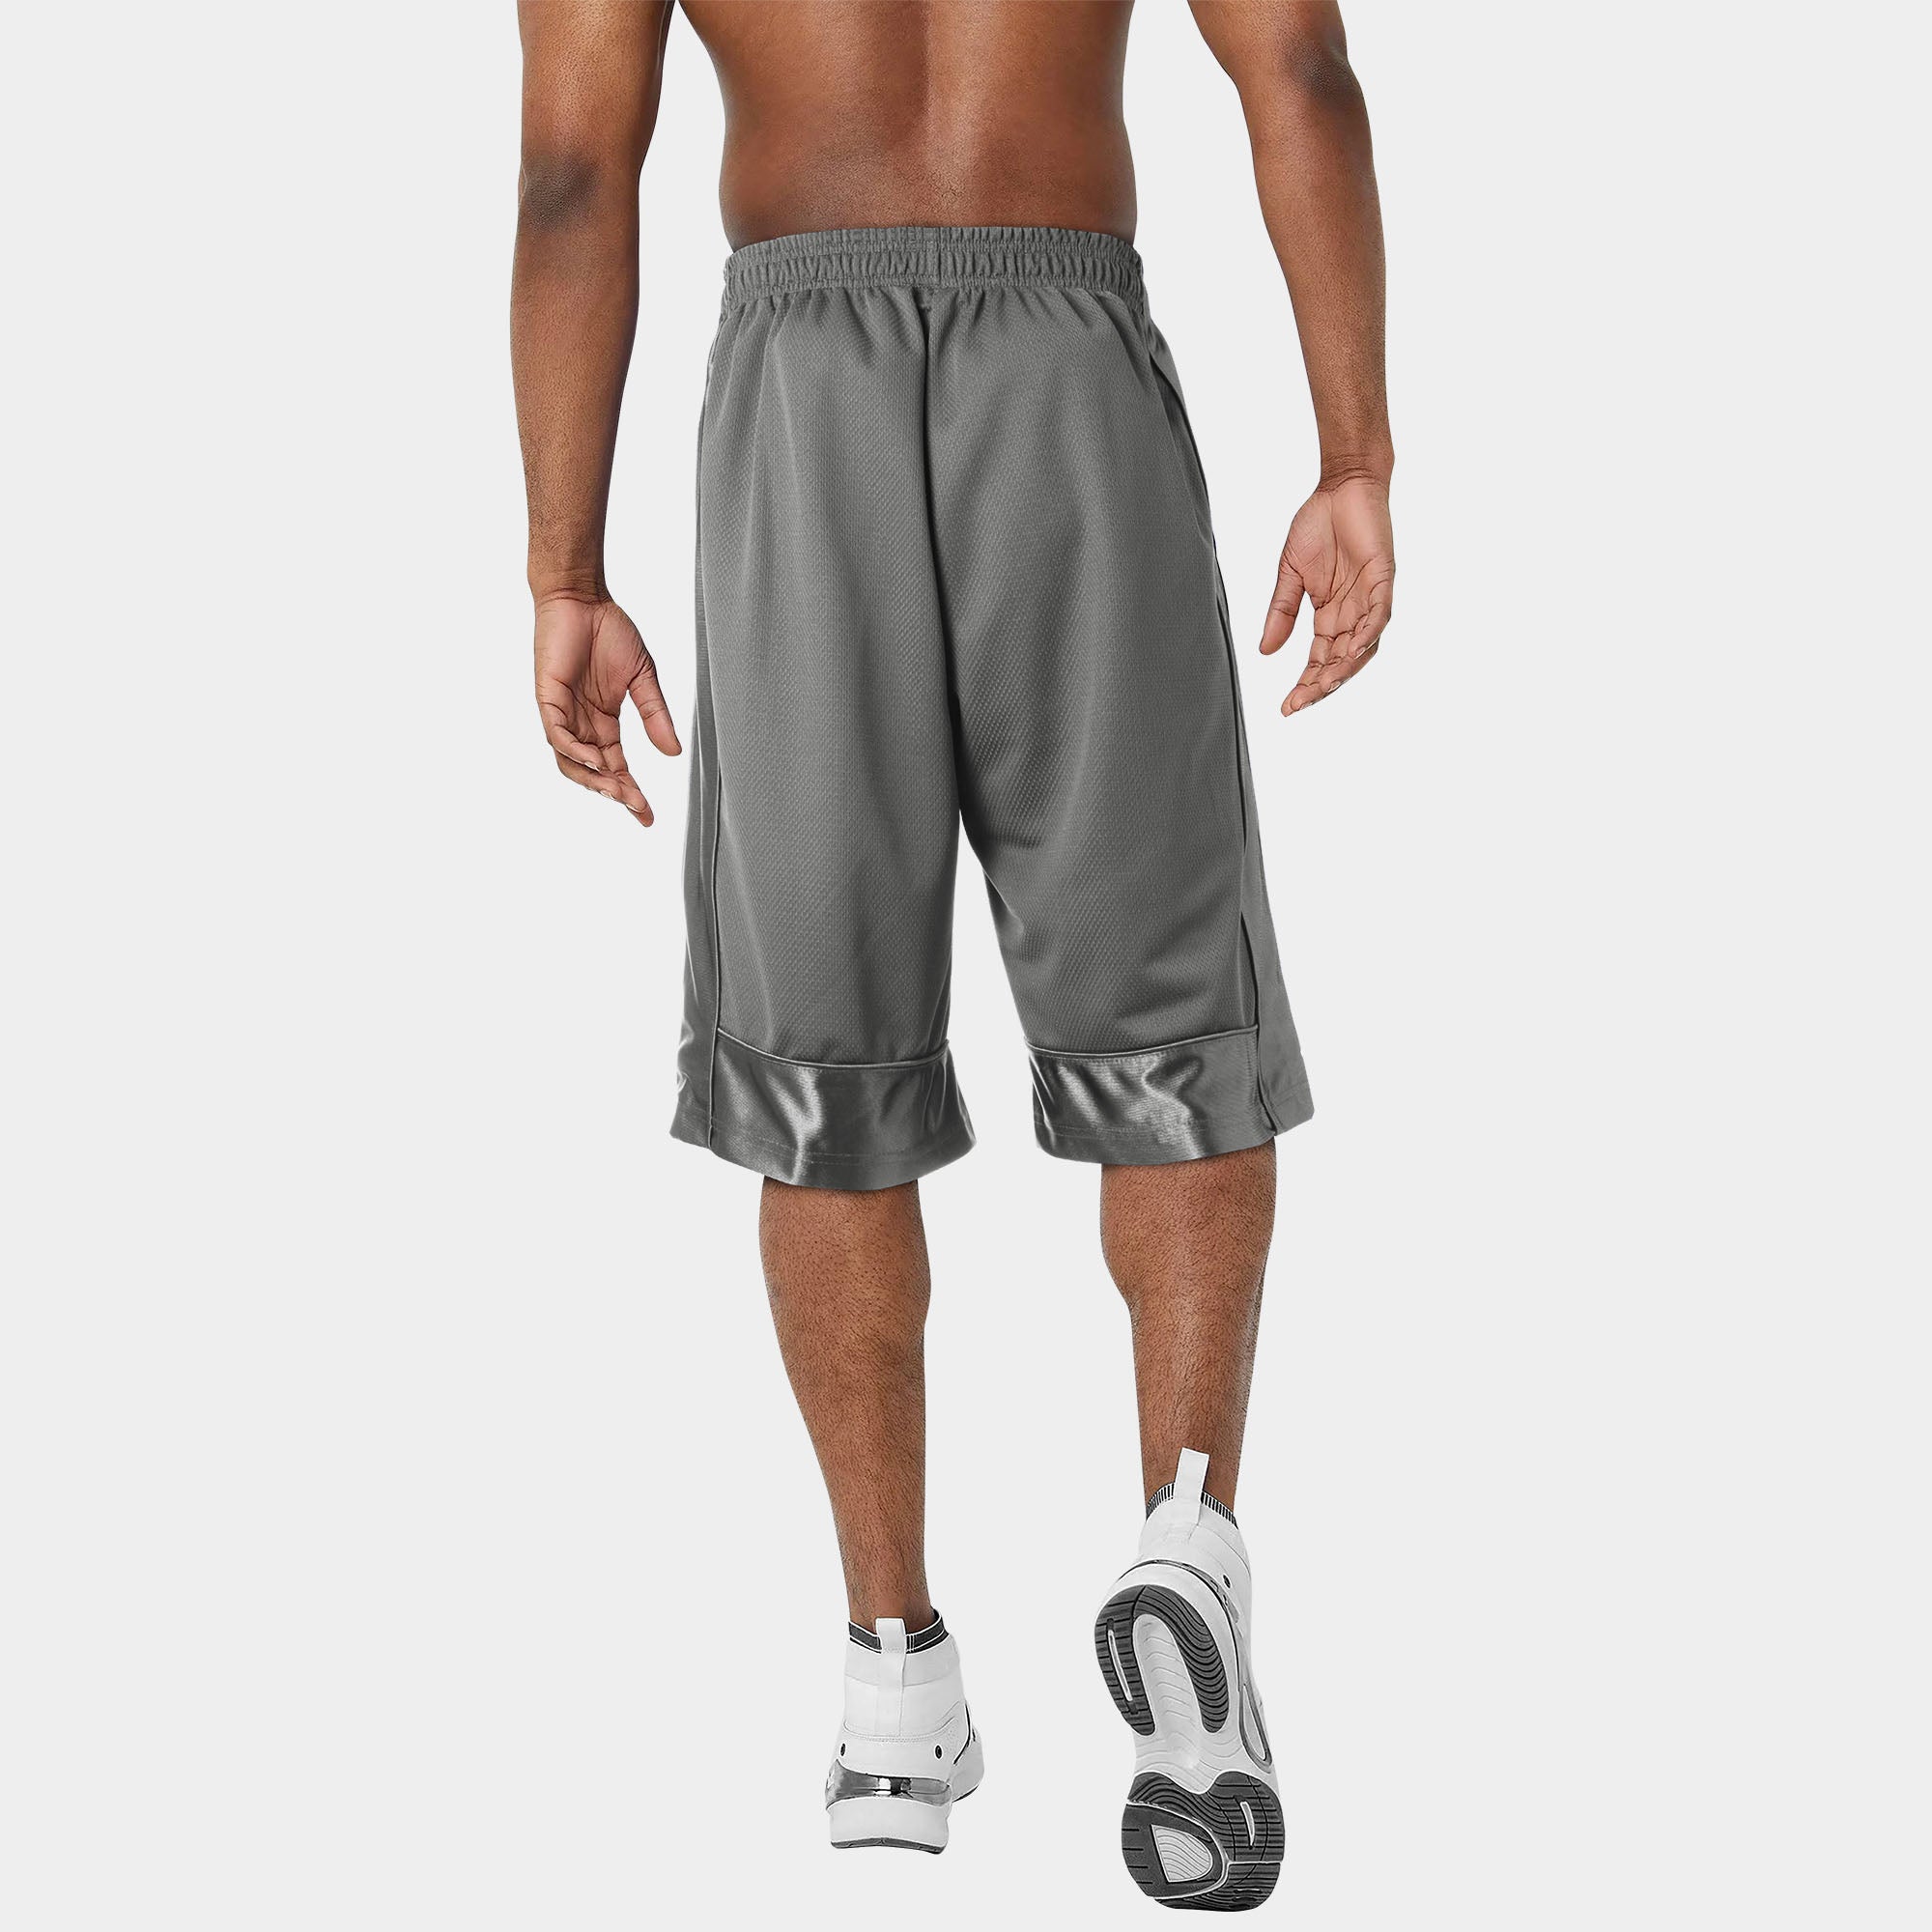 pro club Pro Club Men's Heavyweight Mesh Basketball Shorts - Black/Gray -  Medium